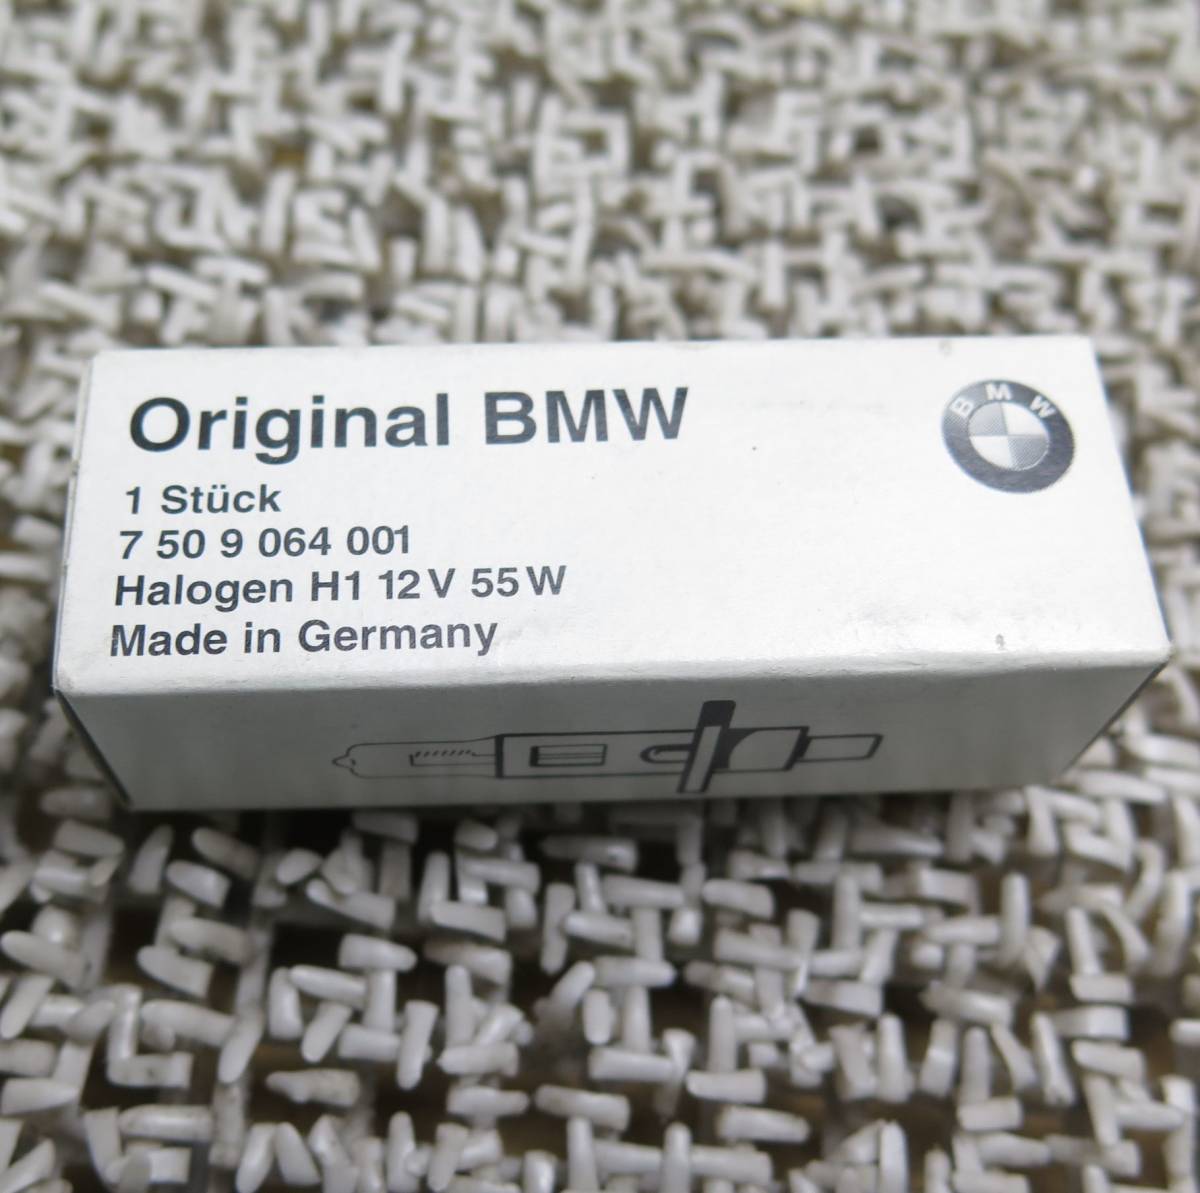 BMW 純正 ハロゲンバルブ1個 H1 HALOGEN BULB PN 7509064001 未使用品 ドイツ製 TR0412.22.70_画像1